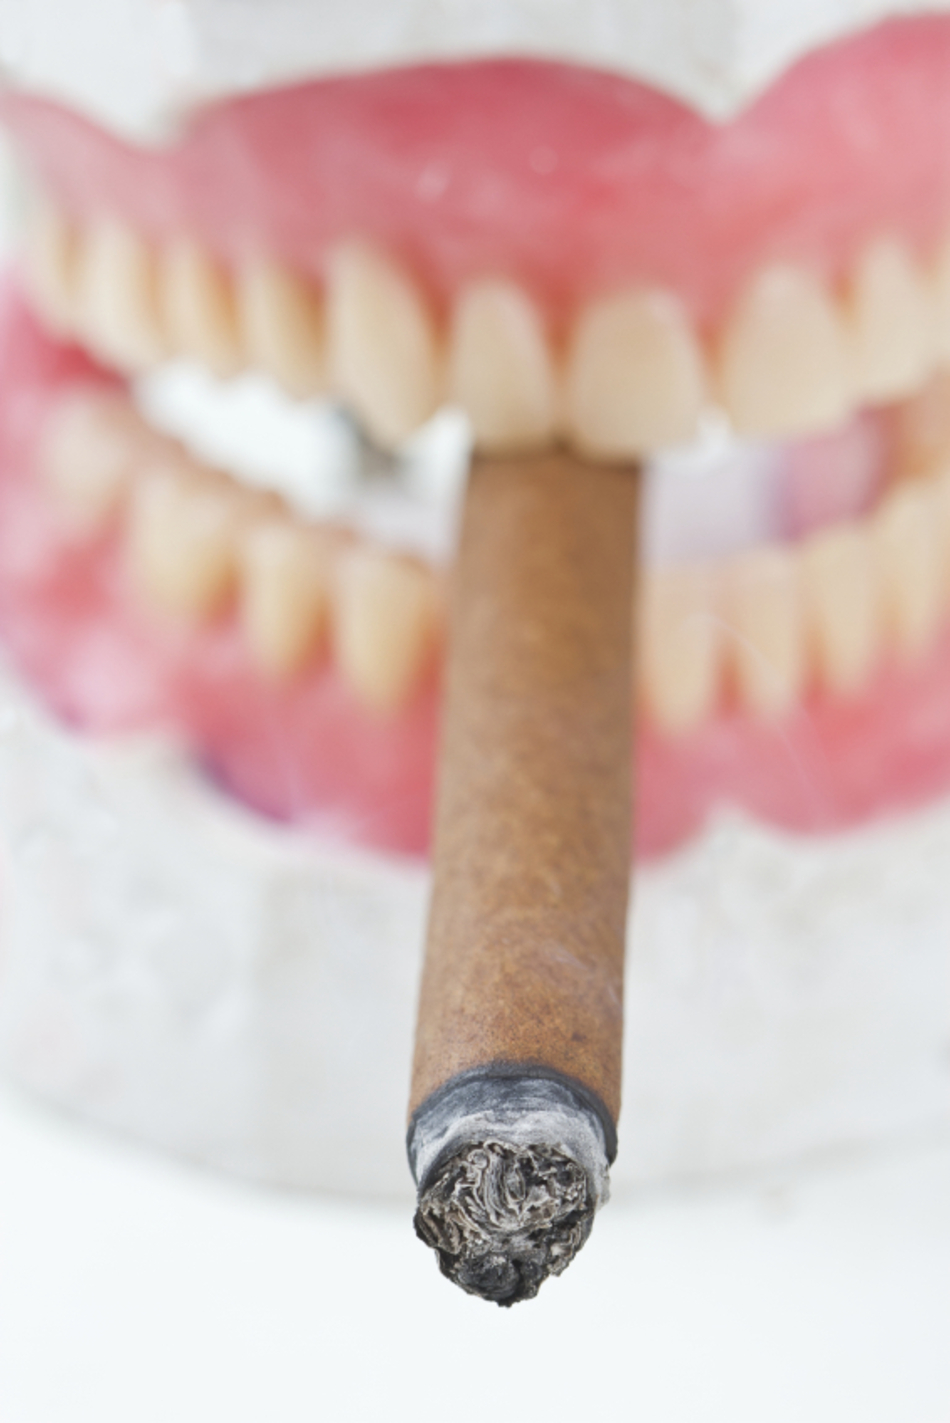 Whether You Smoke It or Chew It, Tobacco Destroys Teeth